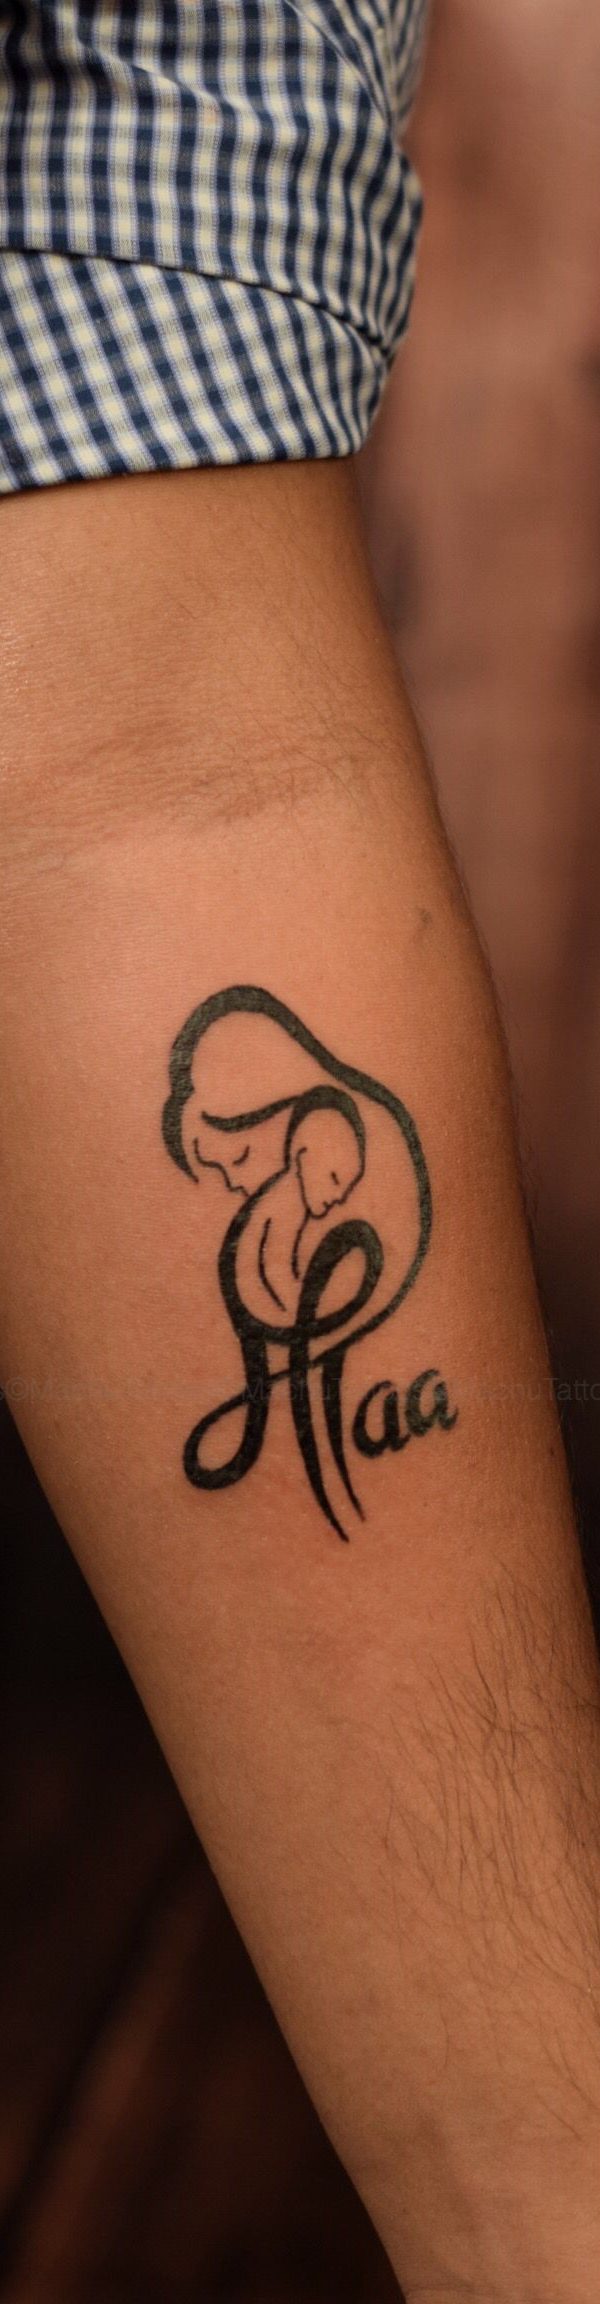 Essential Best Mom Dad Tattoos for back female arm - Best Mom Dad Tattoos -  Best Tattoos - MomCanvas